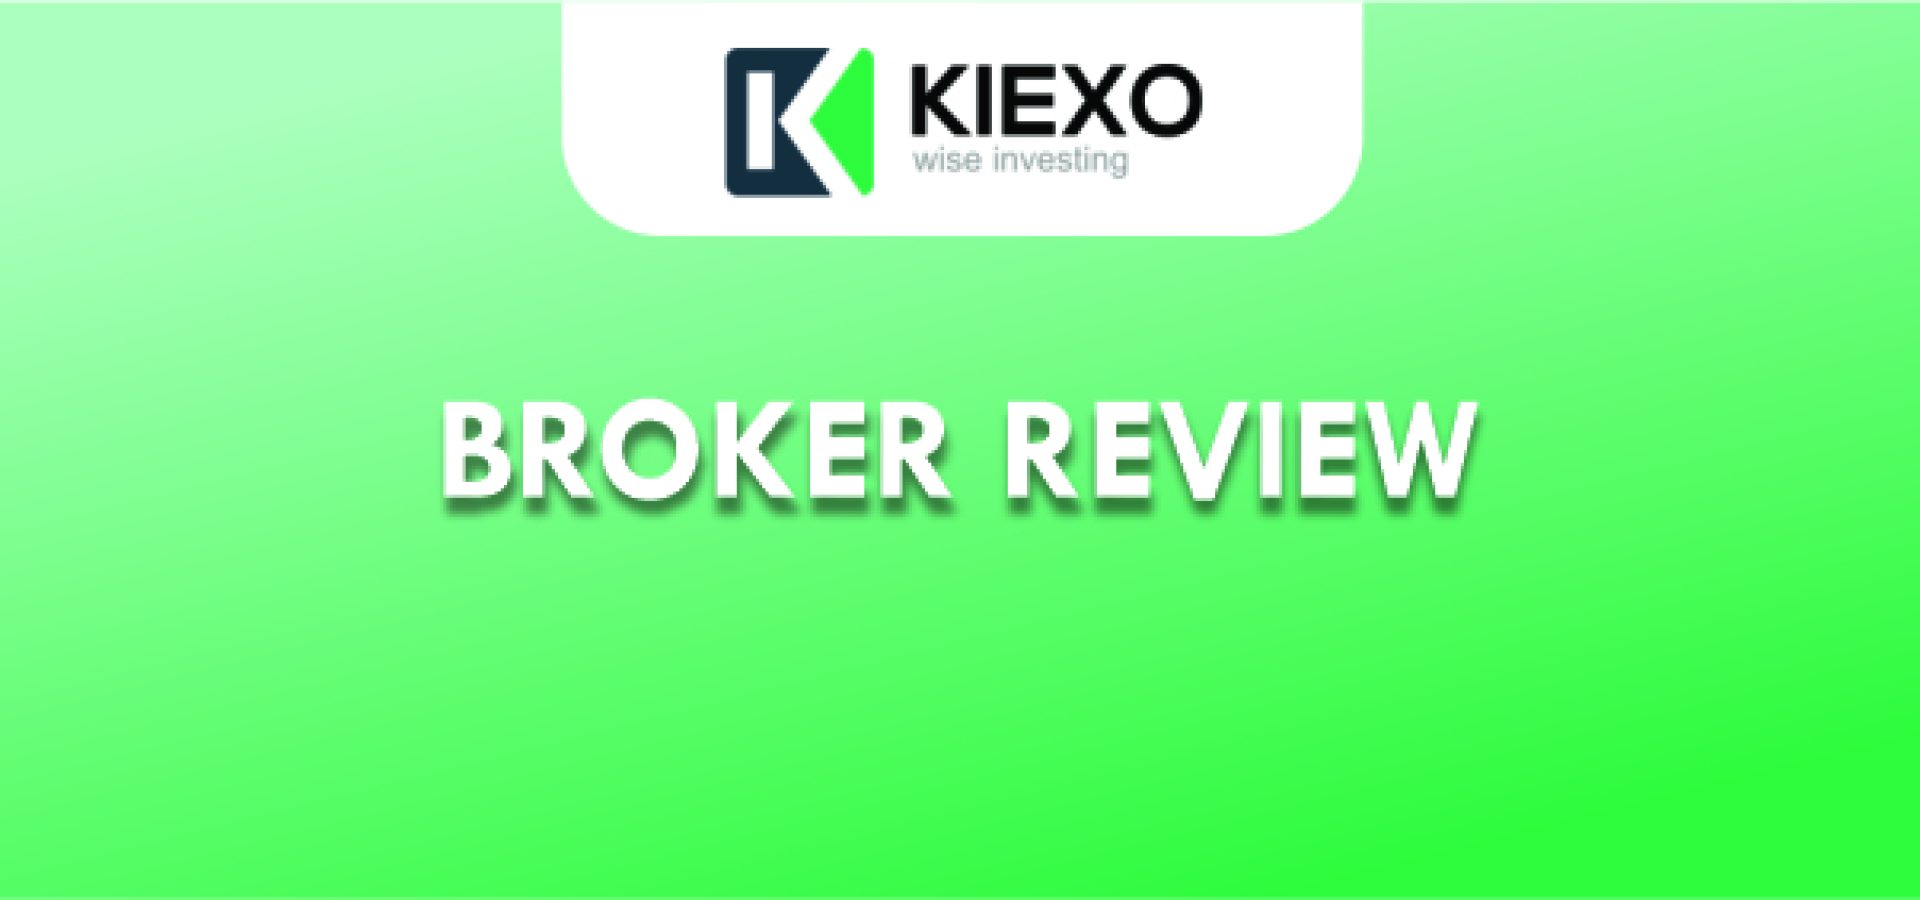 Kiexo Broker Review